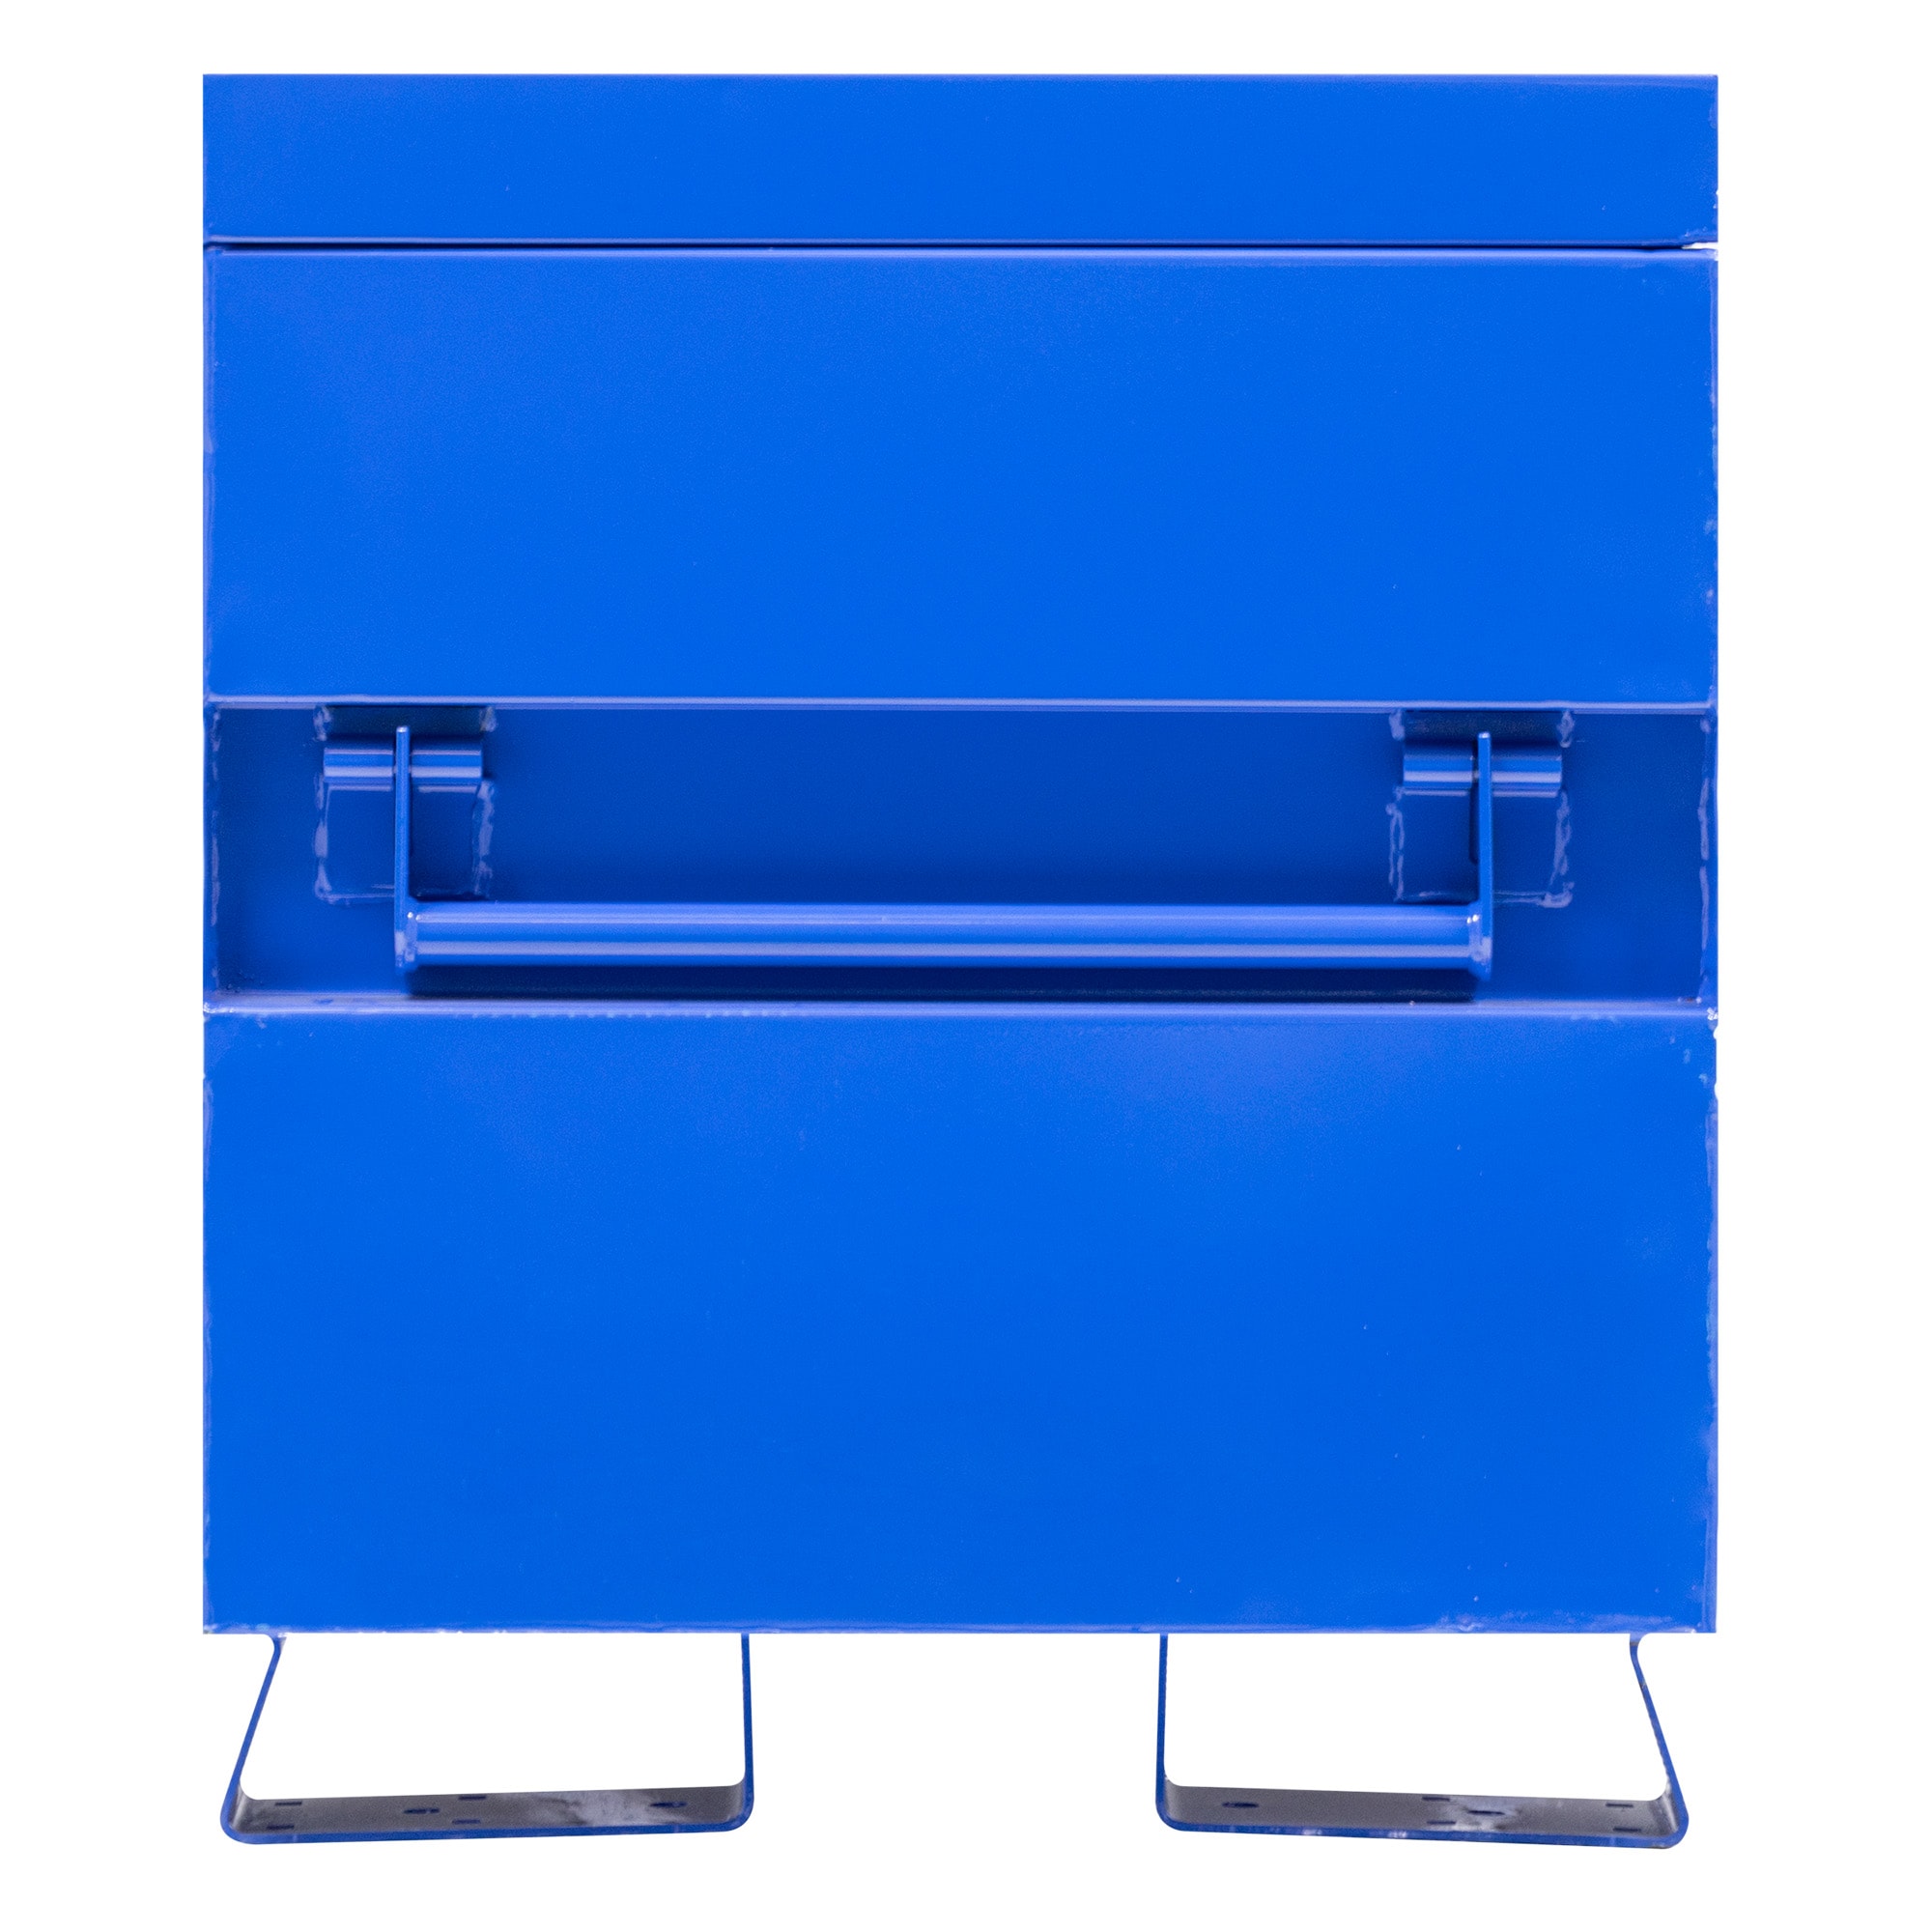 Kobalt 24 In W X 60 In L X 28 In H Blue Steel Jobsite Box In The